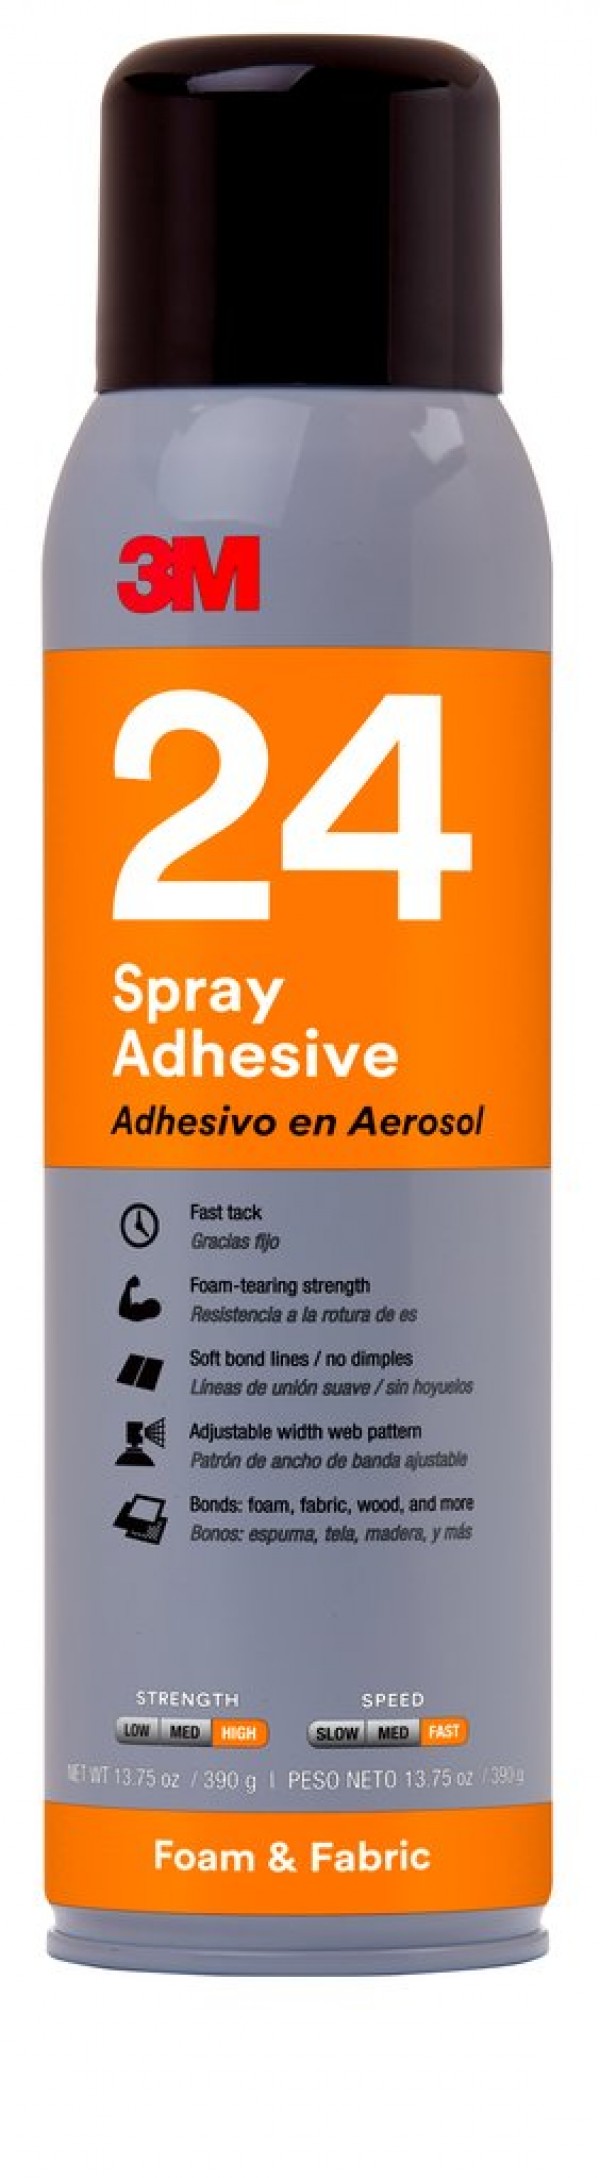 3M™ Foam & Fabric 24 Spray Adhesive Orange, Net Wt 13.8 oz, 12 cans per case